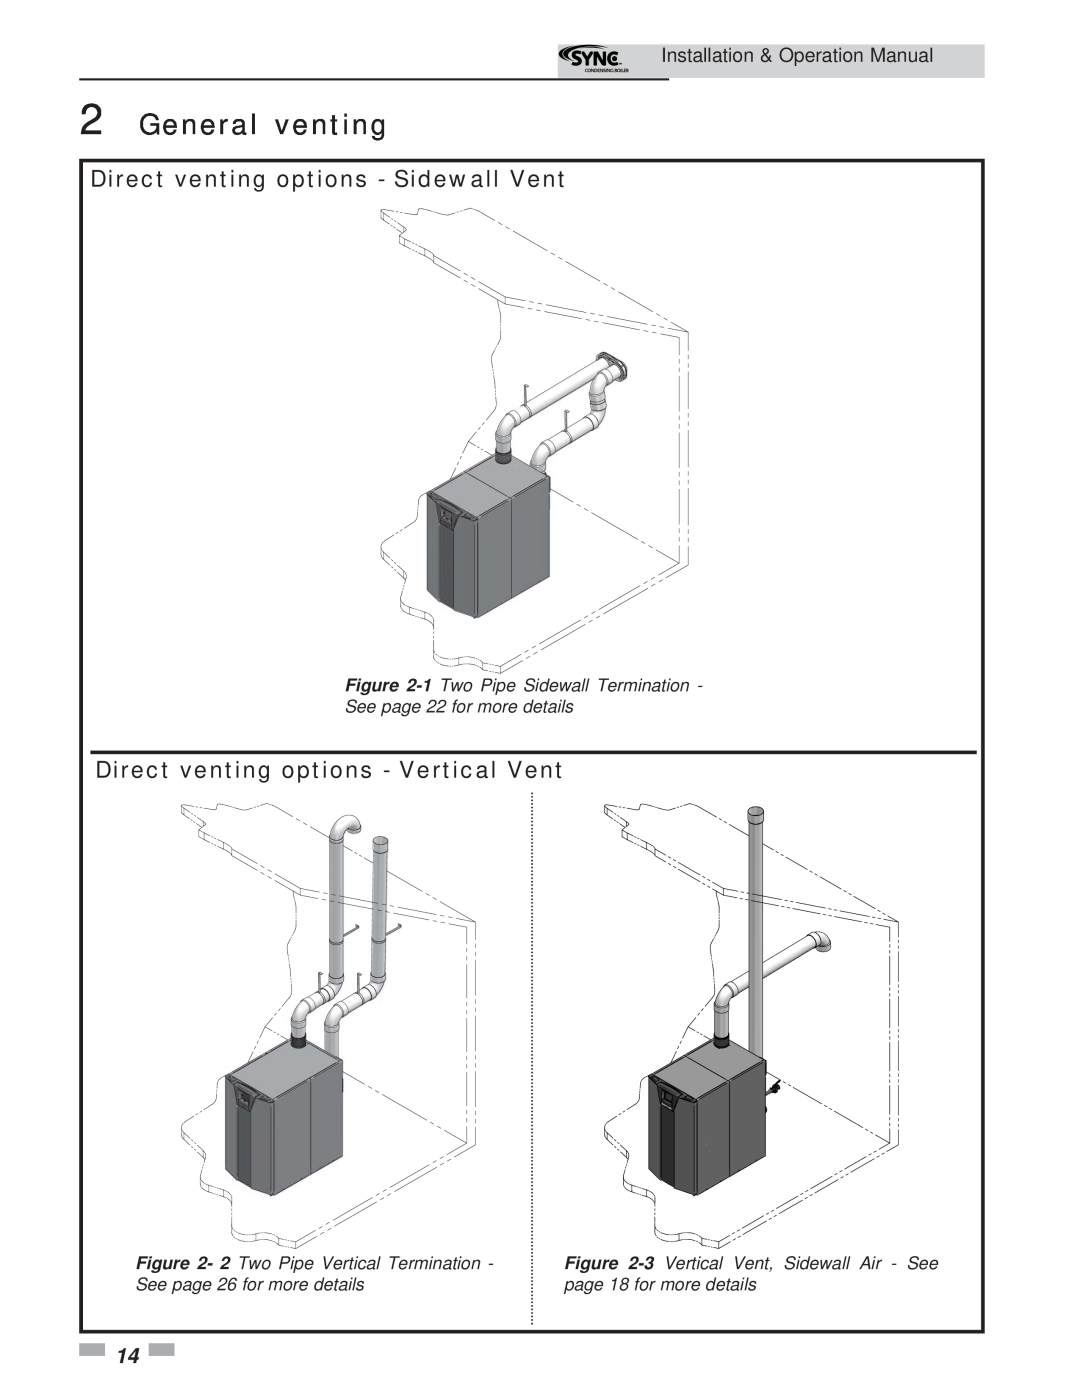 Lochinvar 5 General venting, Direct venting options - Sidewall Vent, Direct venting options - Vertical Vent 